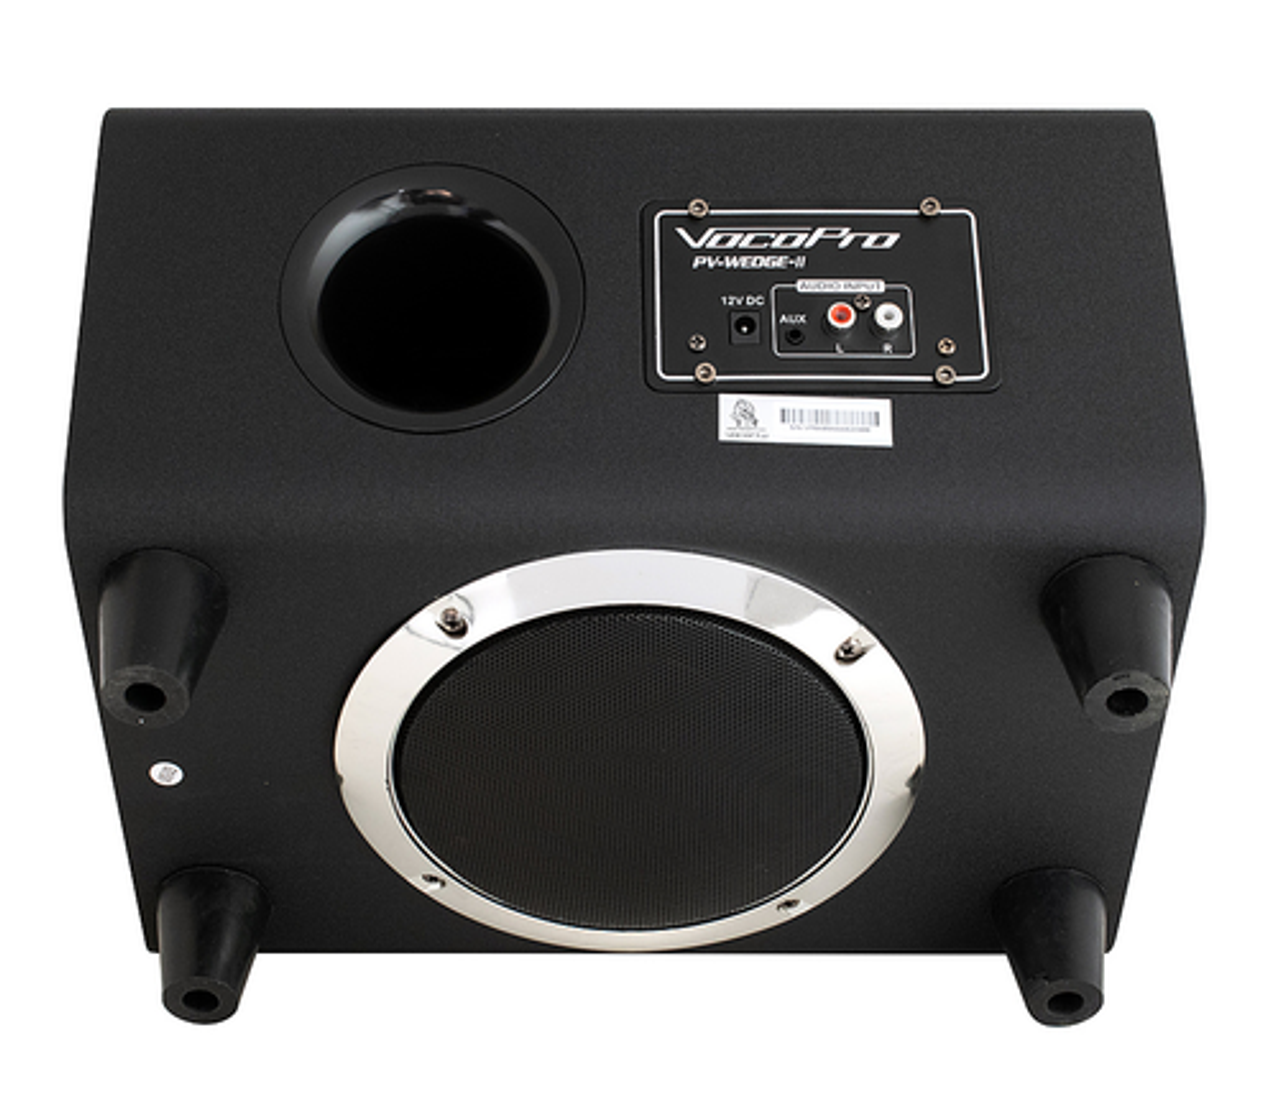 VocoPro - PV-WEDGE-II - Black